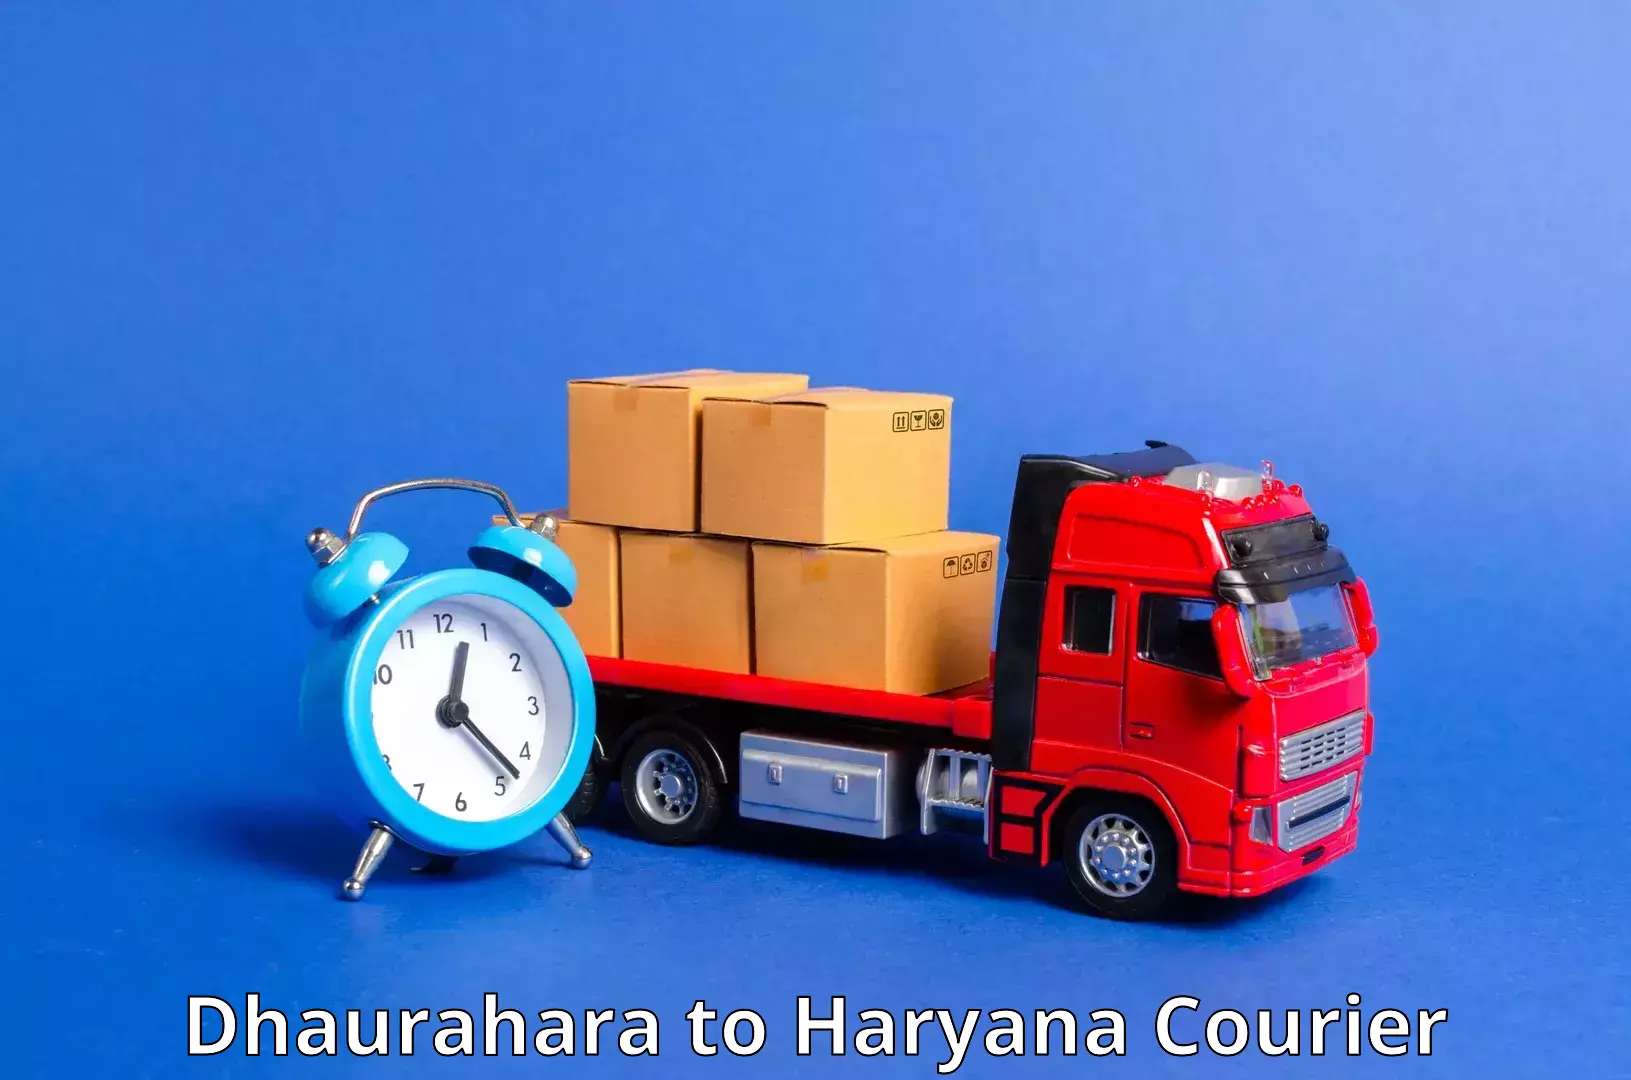 Global courier networks Dhaurahara to Loharu